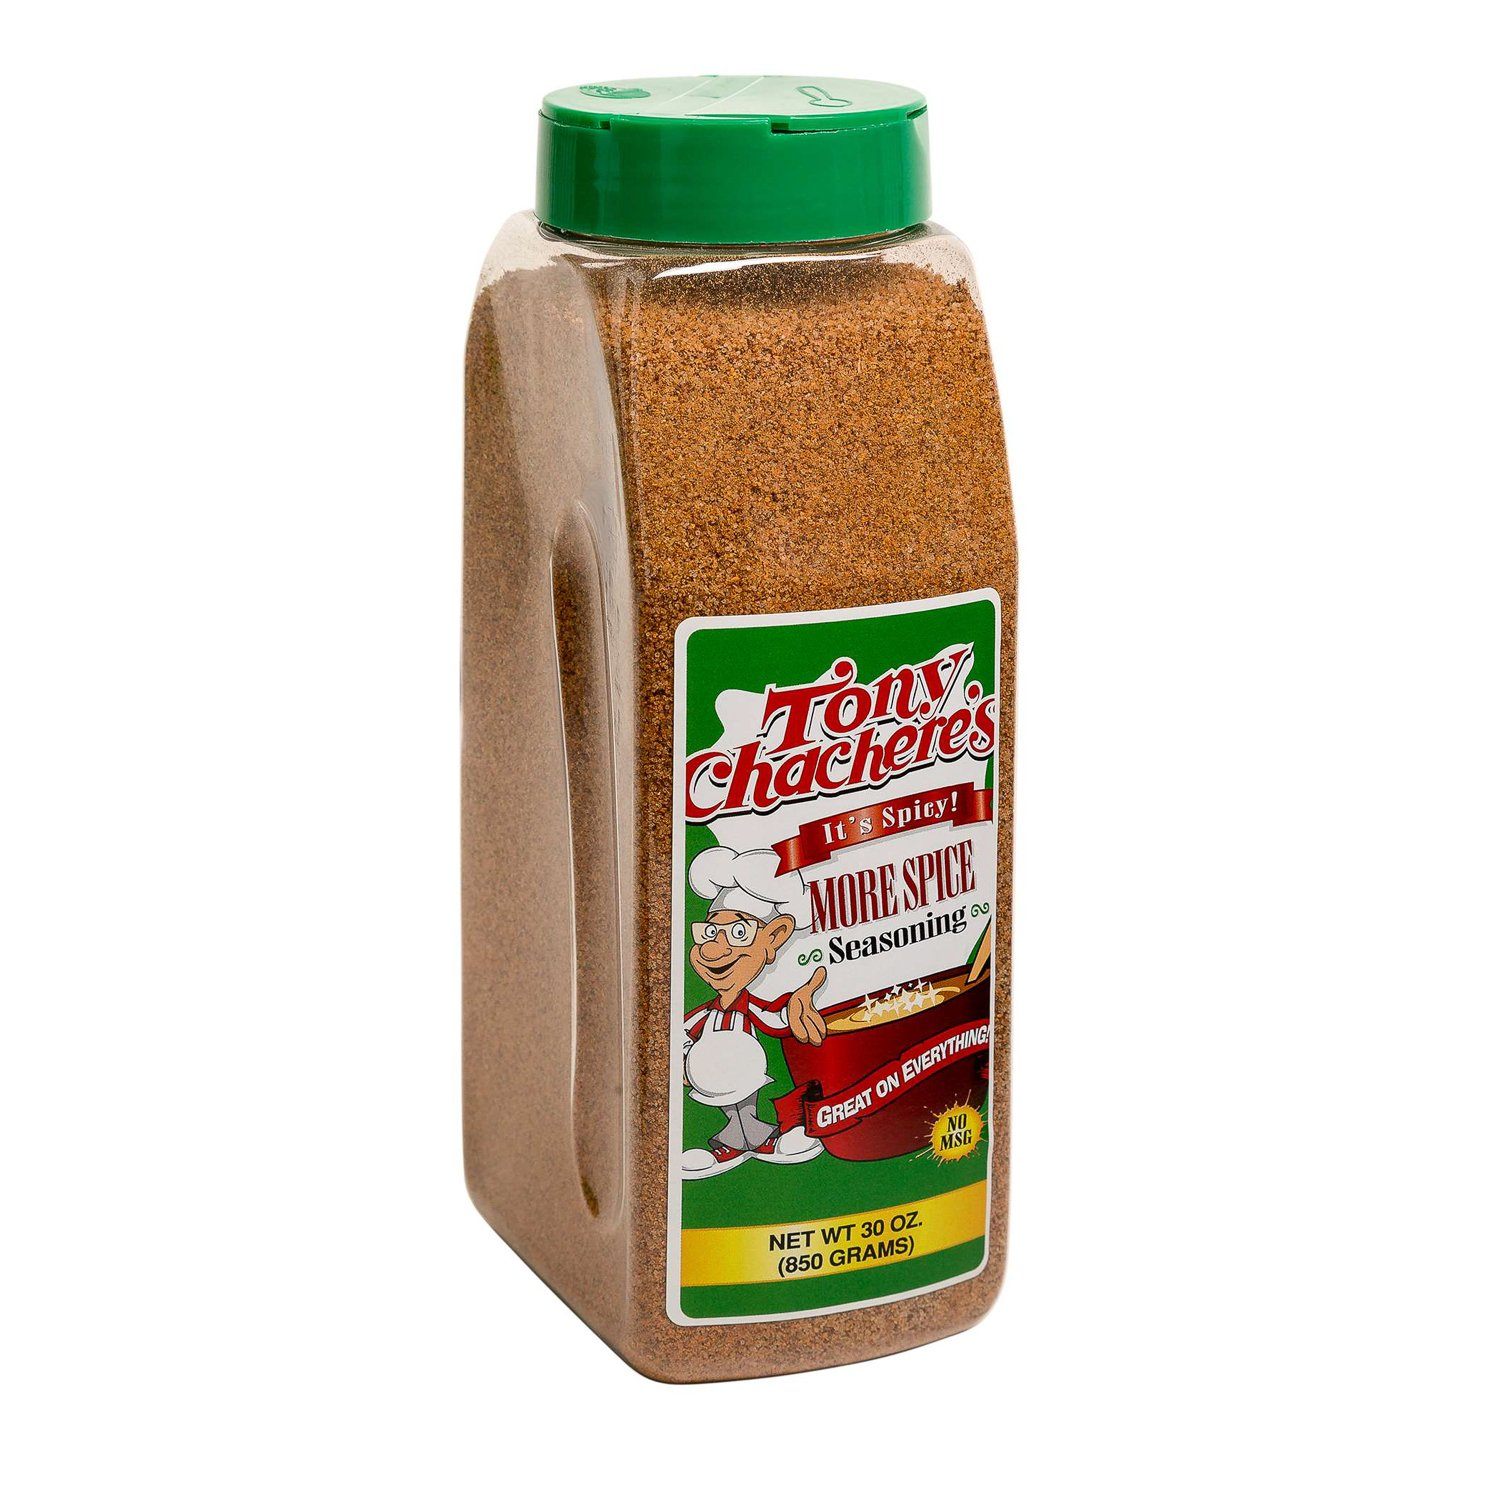 Original Spice Blend - Creole Seasoning - Creole Spice - Seasonest